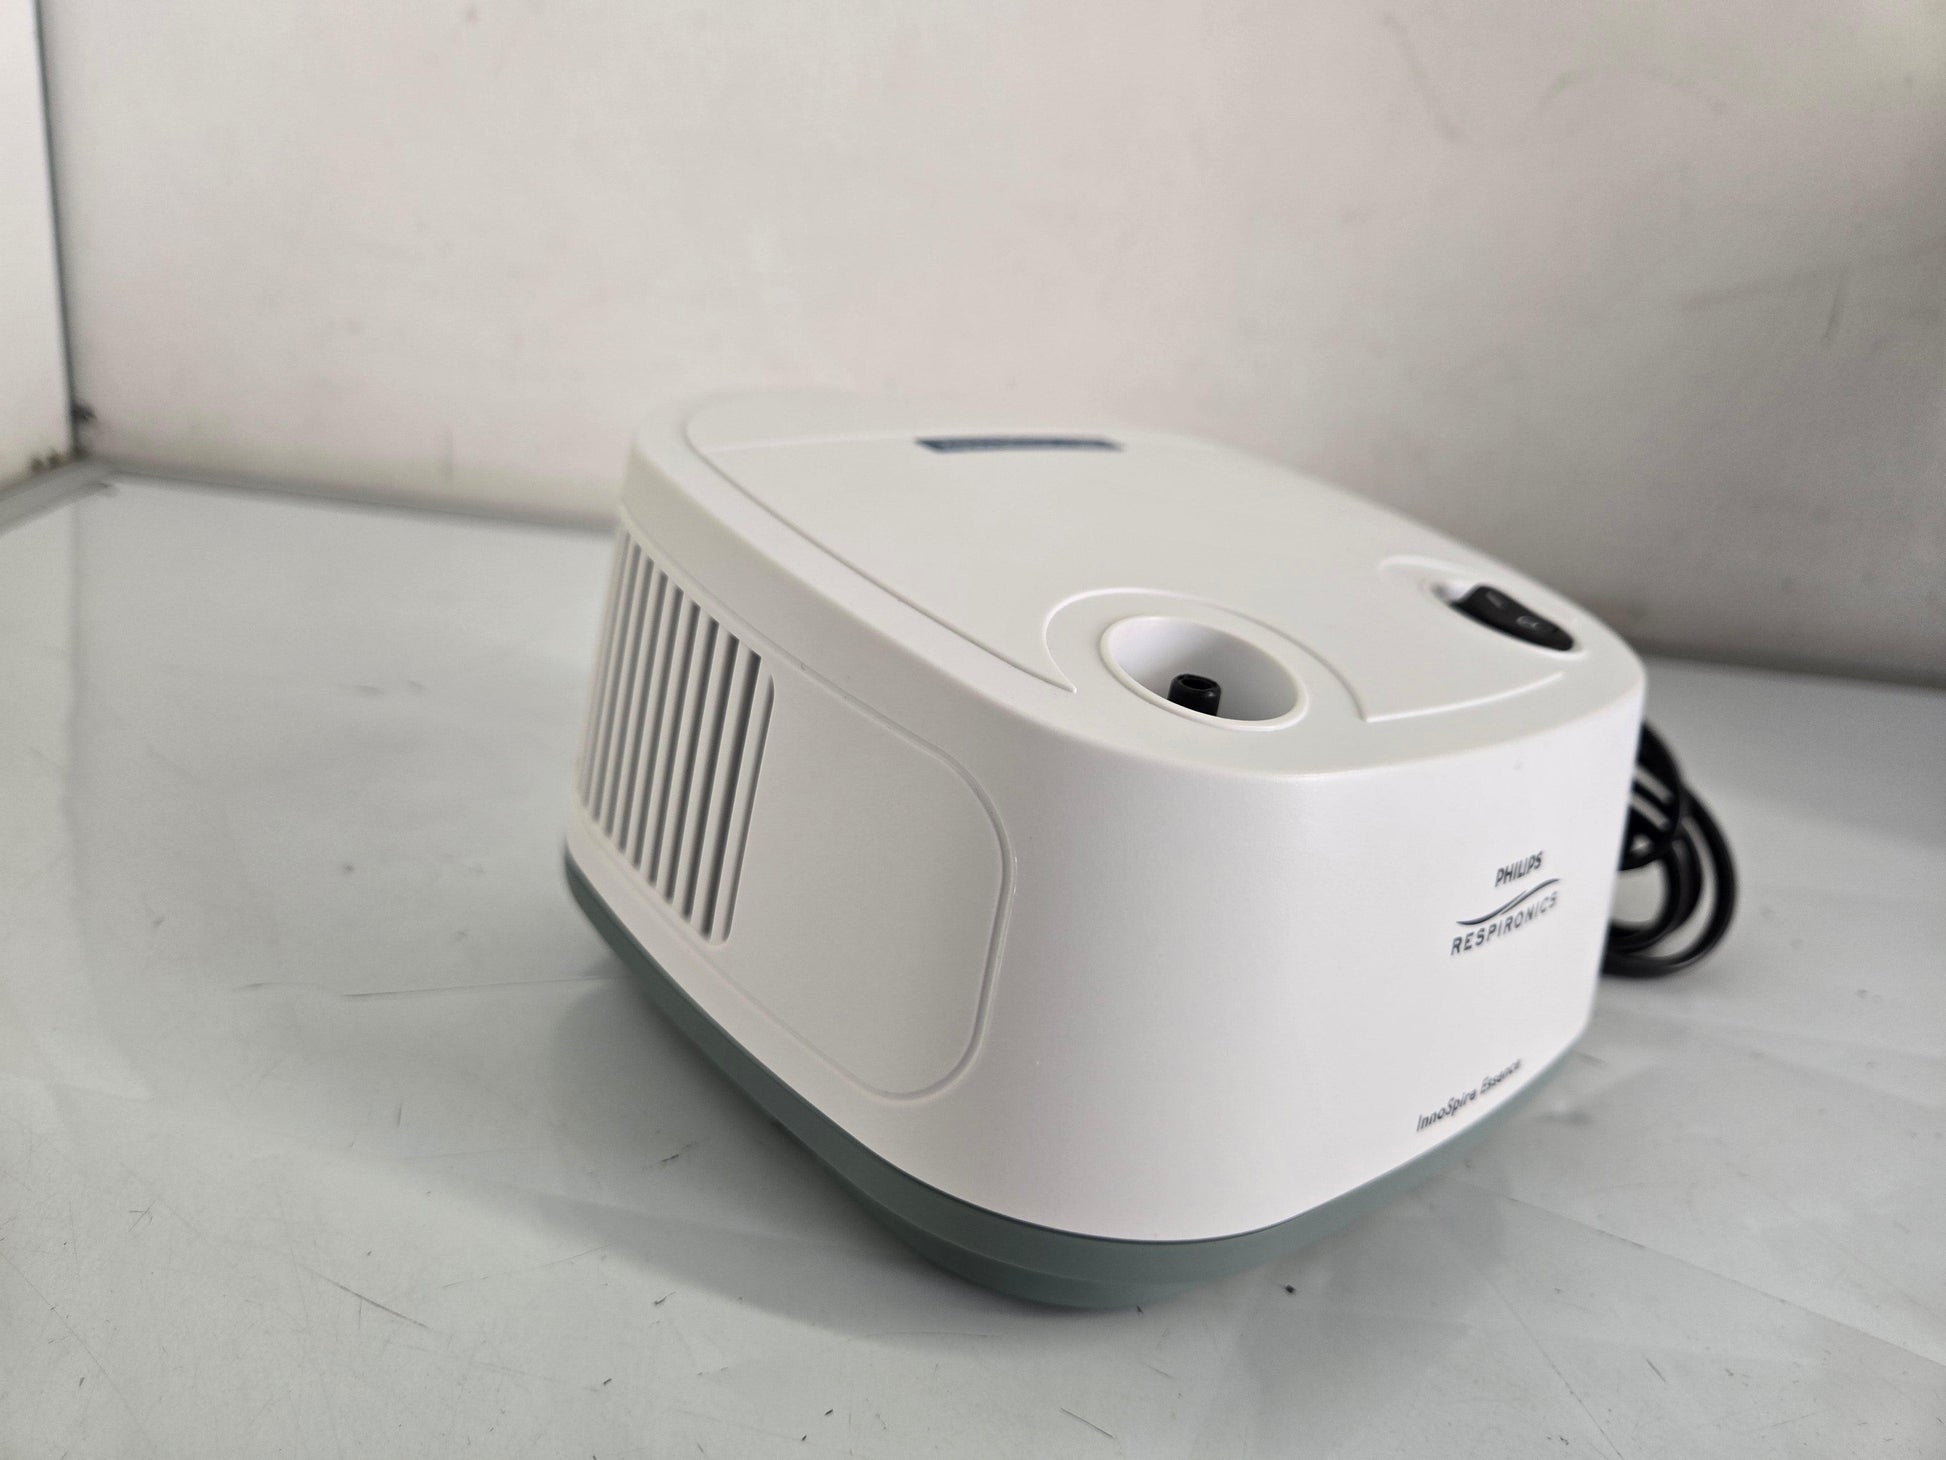 USED Philips Respironics InnoSpire Essence Nebulizer MFG # 1095060 - MBR Medicals